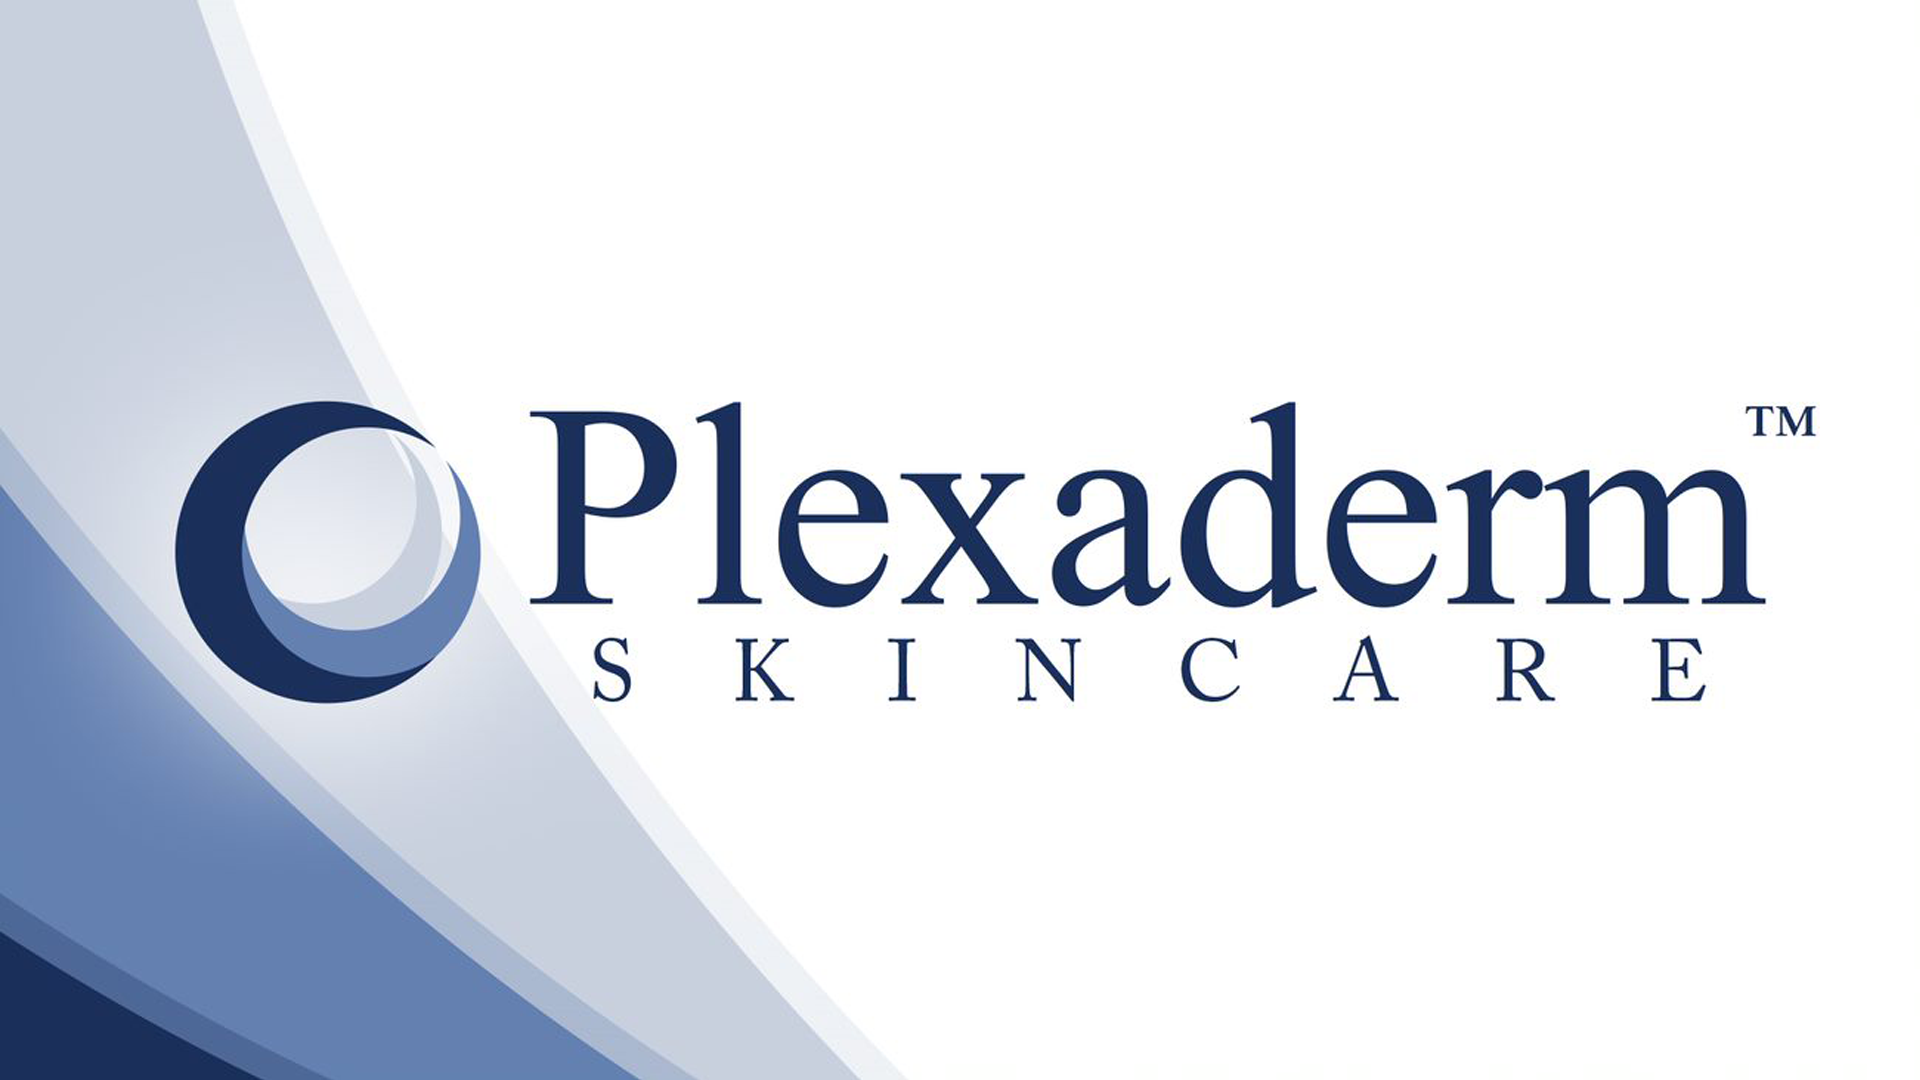 WNY Living - July 30 - Plexaderm Skincare (THIS VIDEO IS SPONSORED BY PLEXADERM SKINCARE)